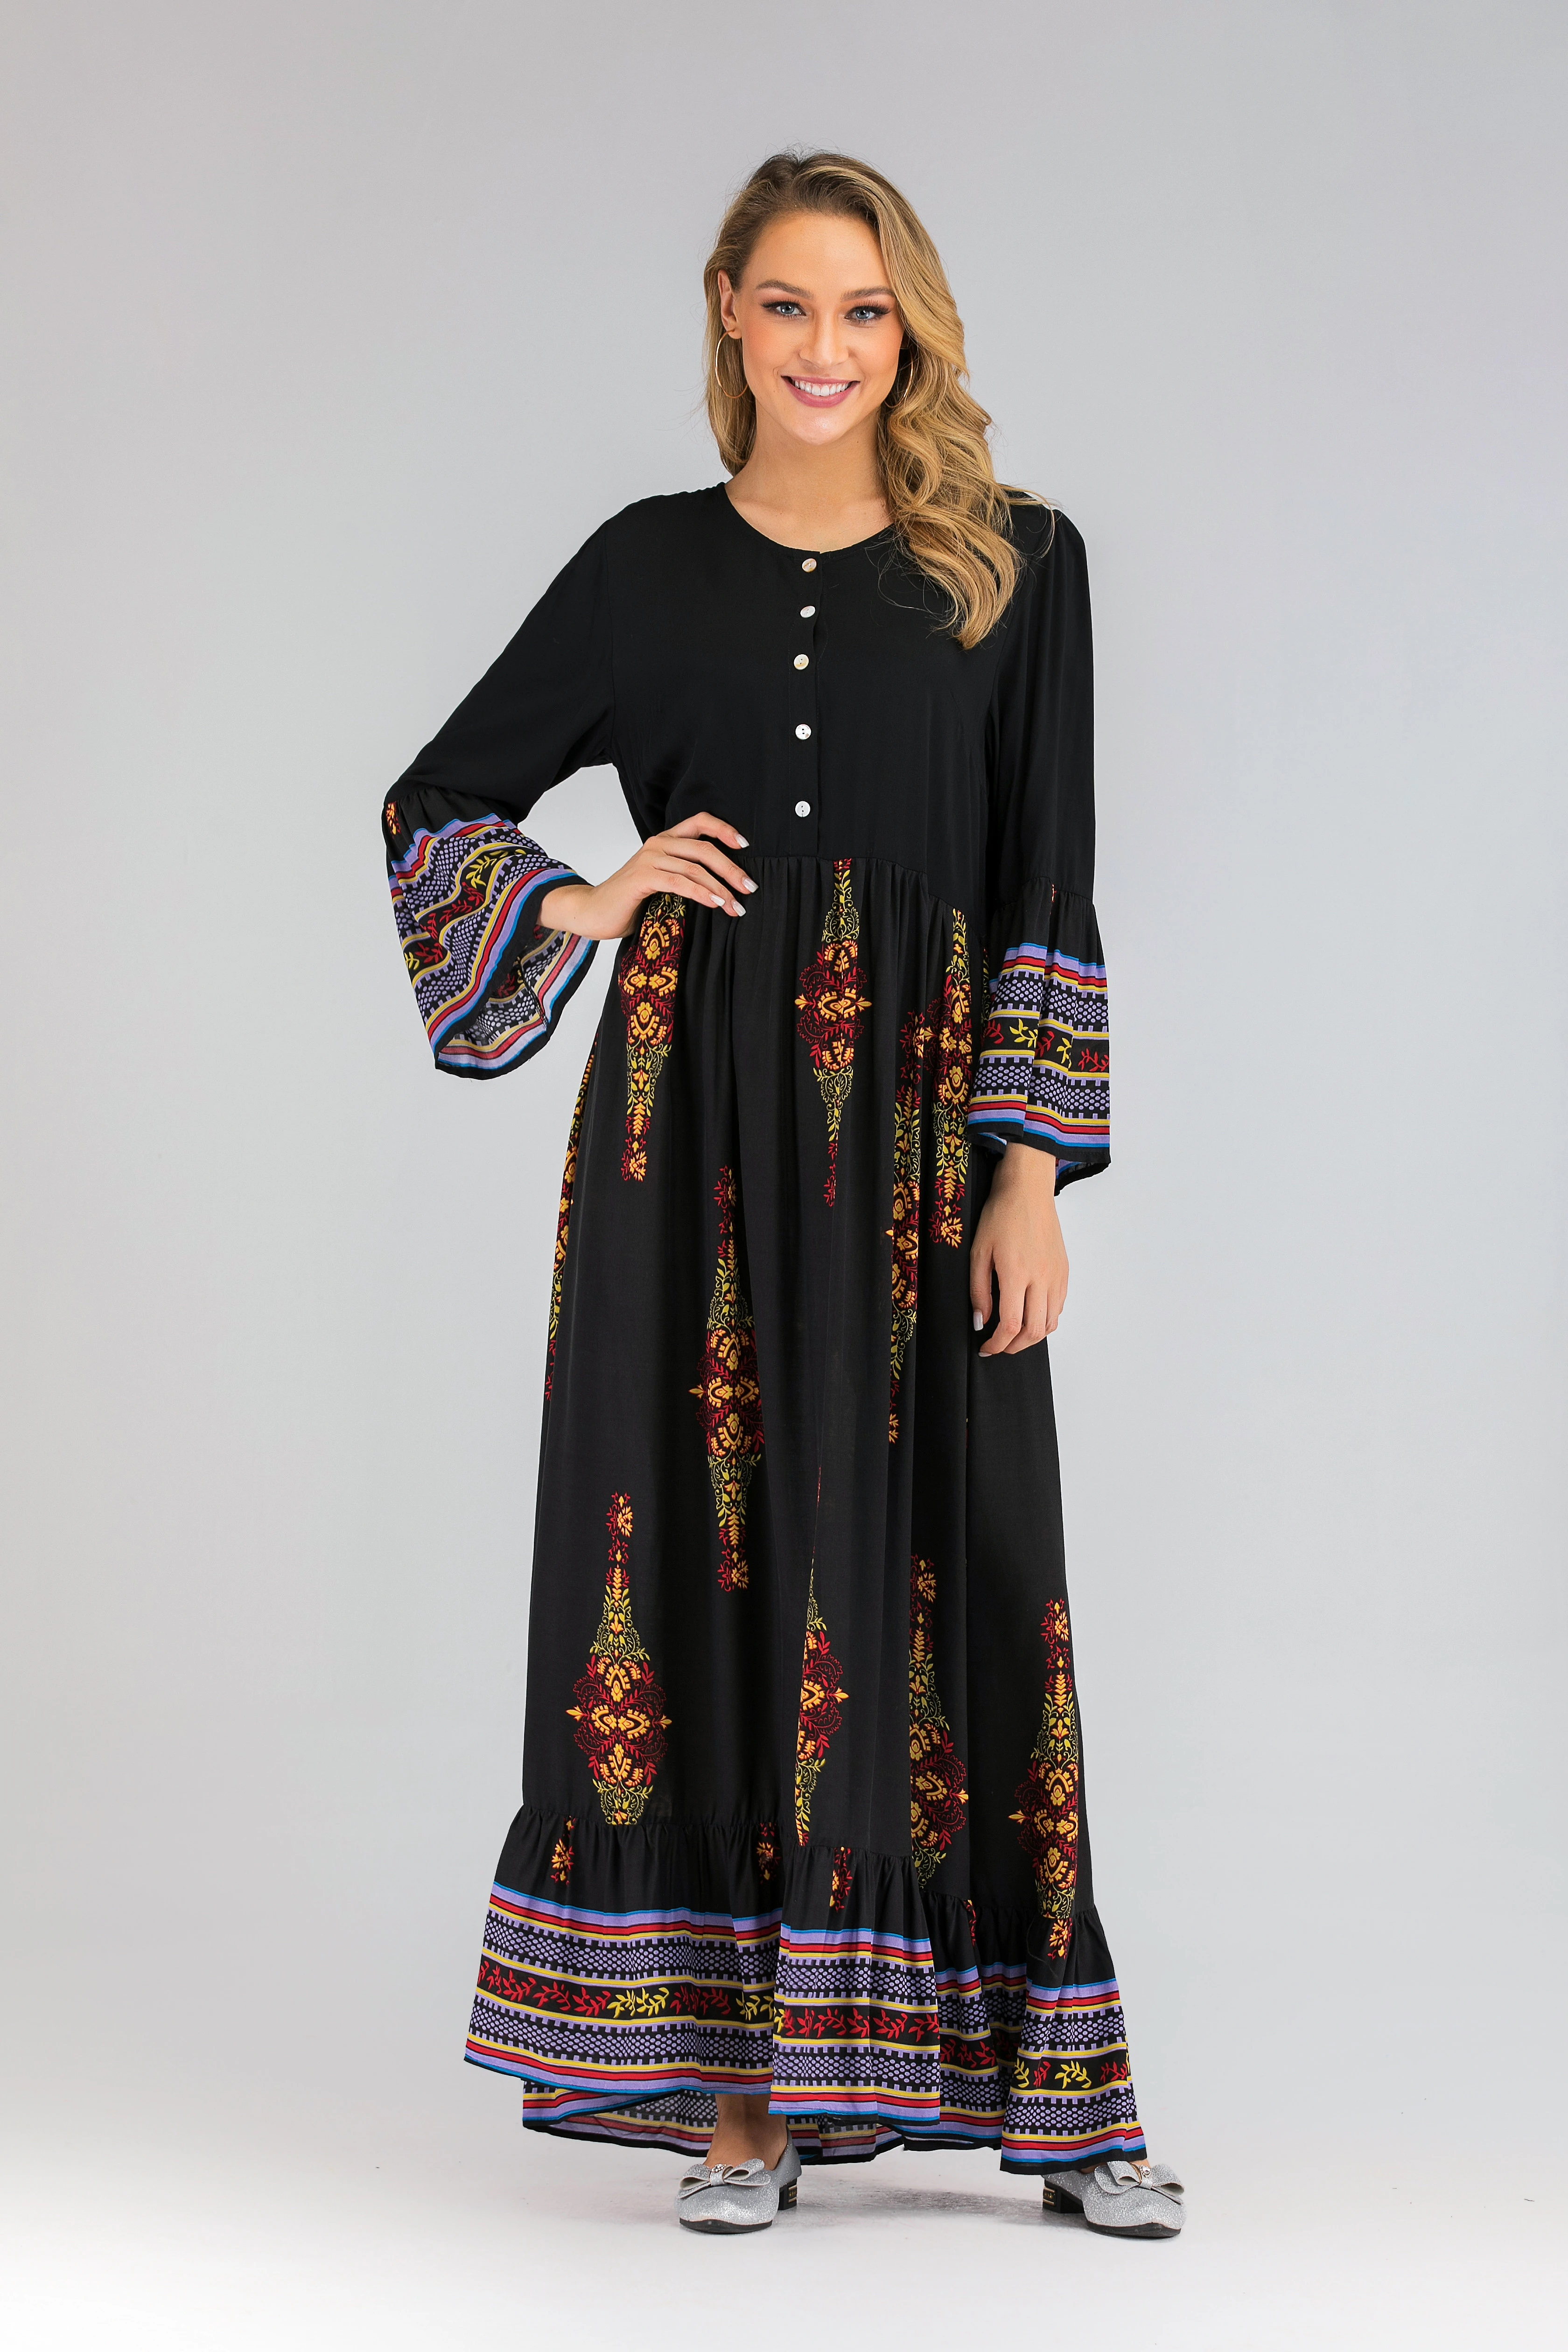 PE6231 Islamic Arabic Women Casual Plus Size Clothing Long Sleeve Cotton Maxi Dresses Abaya Long Muslim Dress